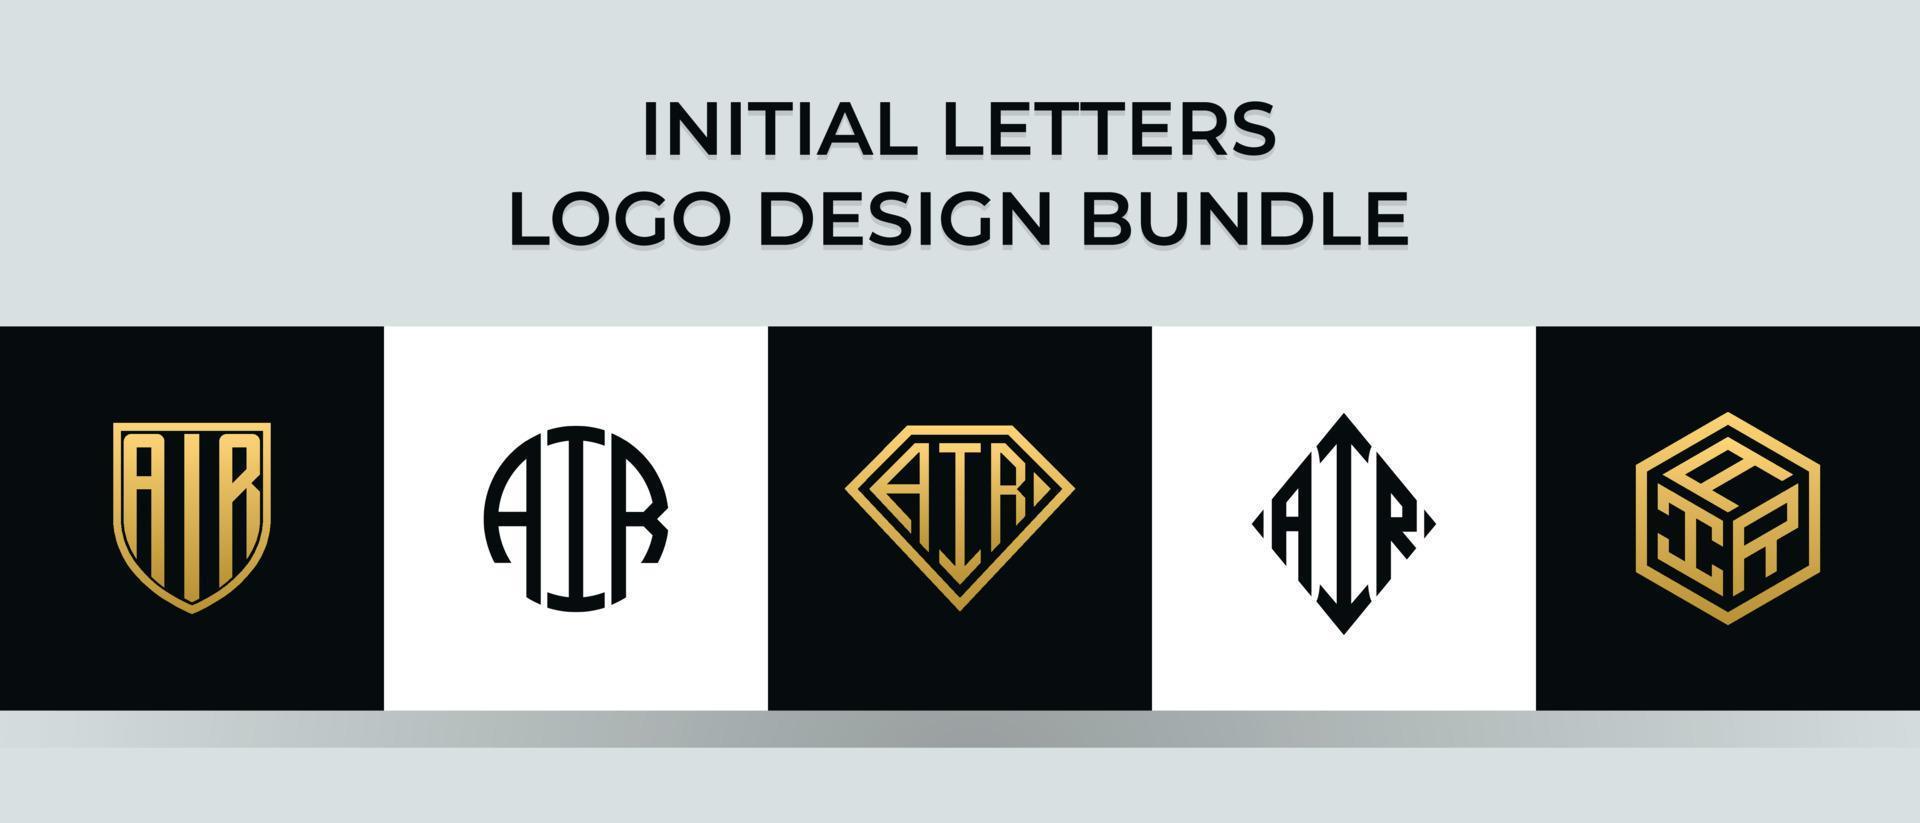 Initial letters AIR logo designs Bundle vector